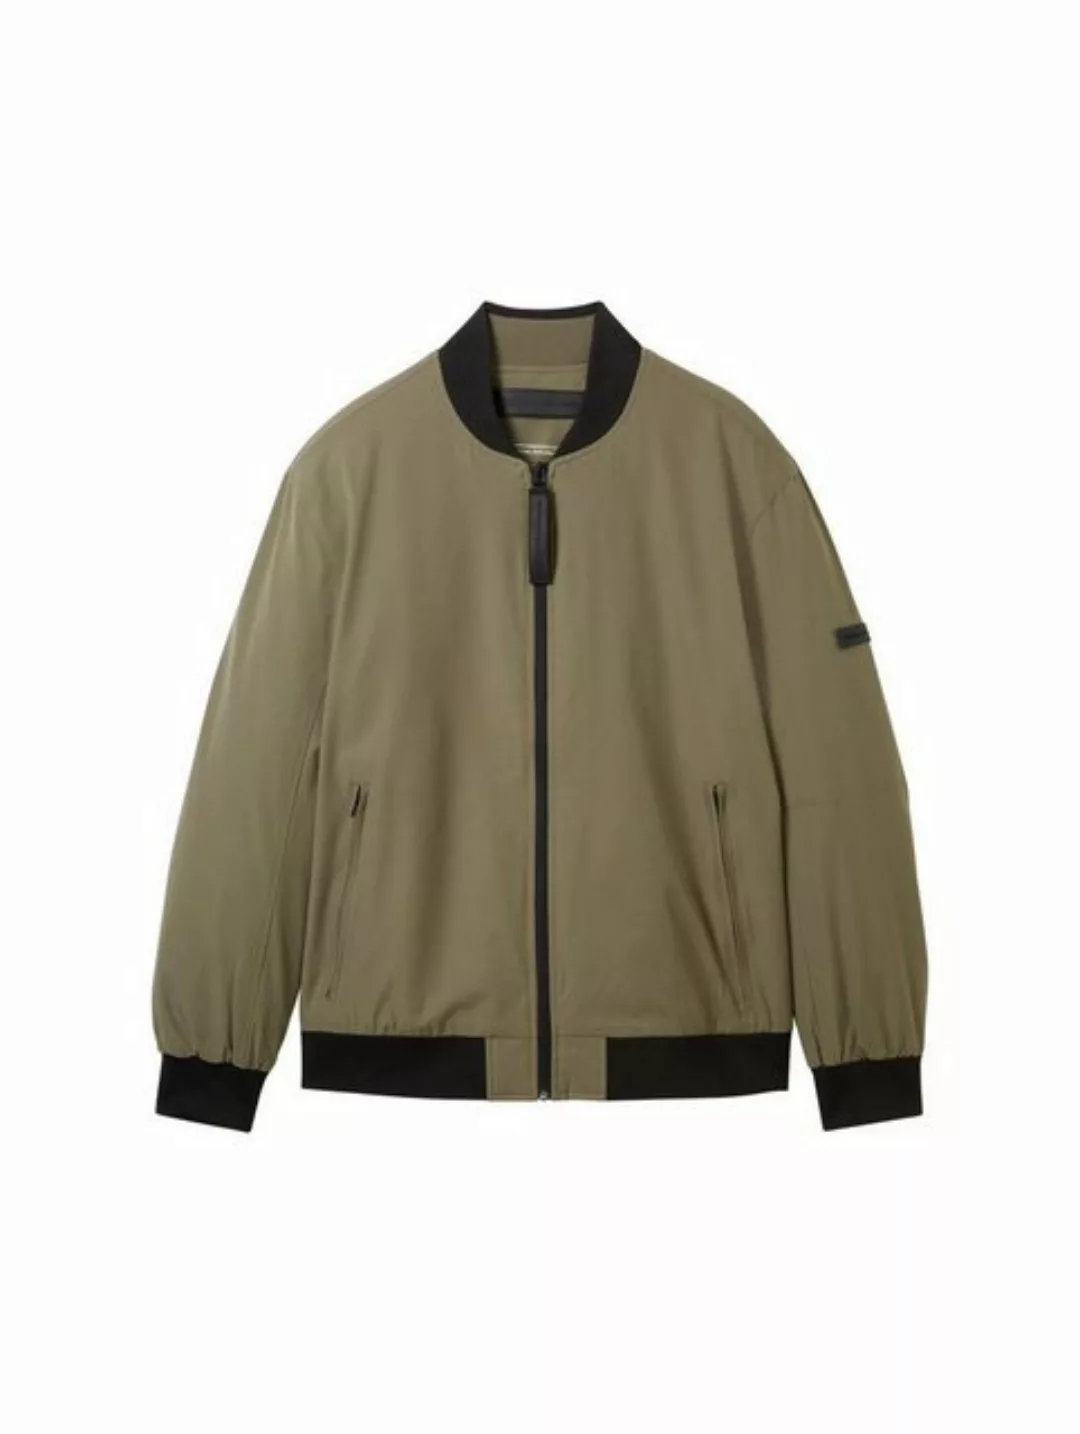 TOM TAILOR Denim Outdoorjacke bomber jacket, Dusty Olive Green günstig online kaufen